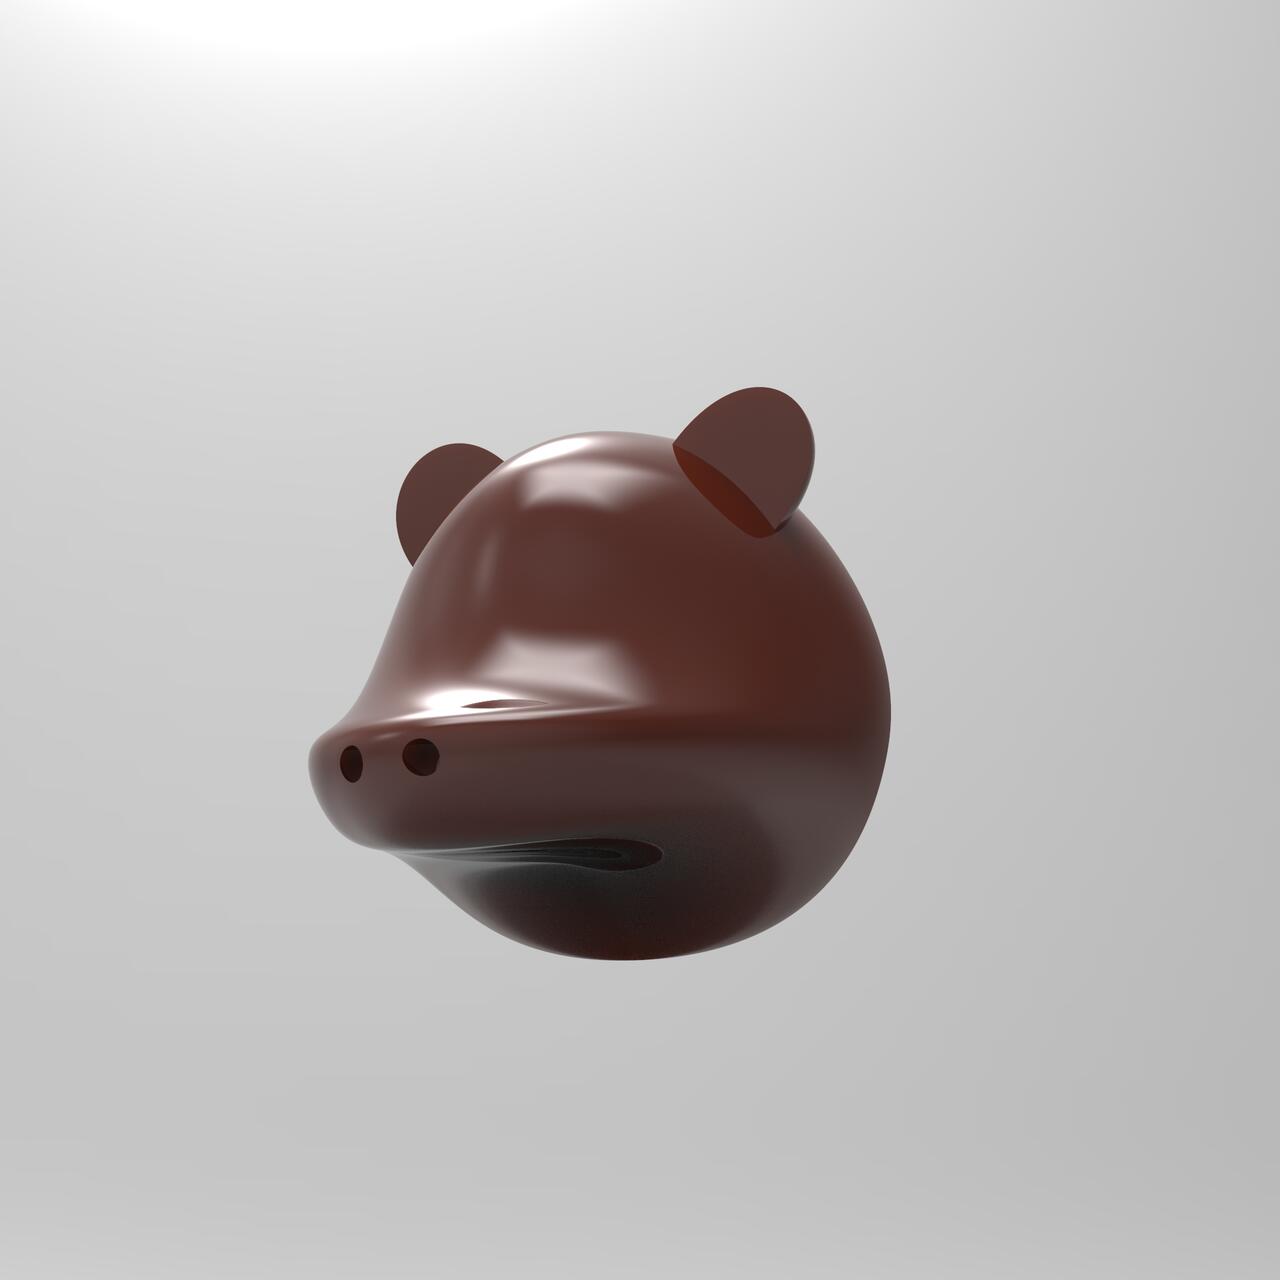 3D rendered model of a bear head.